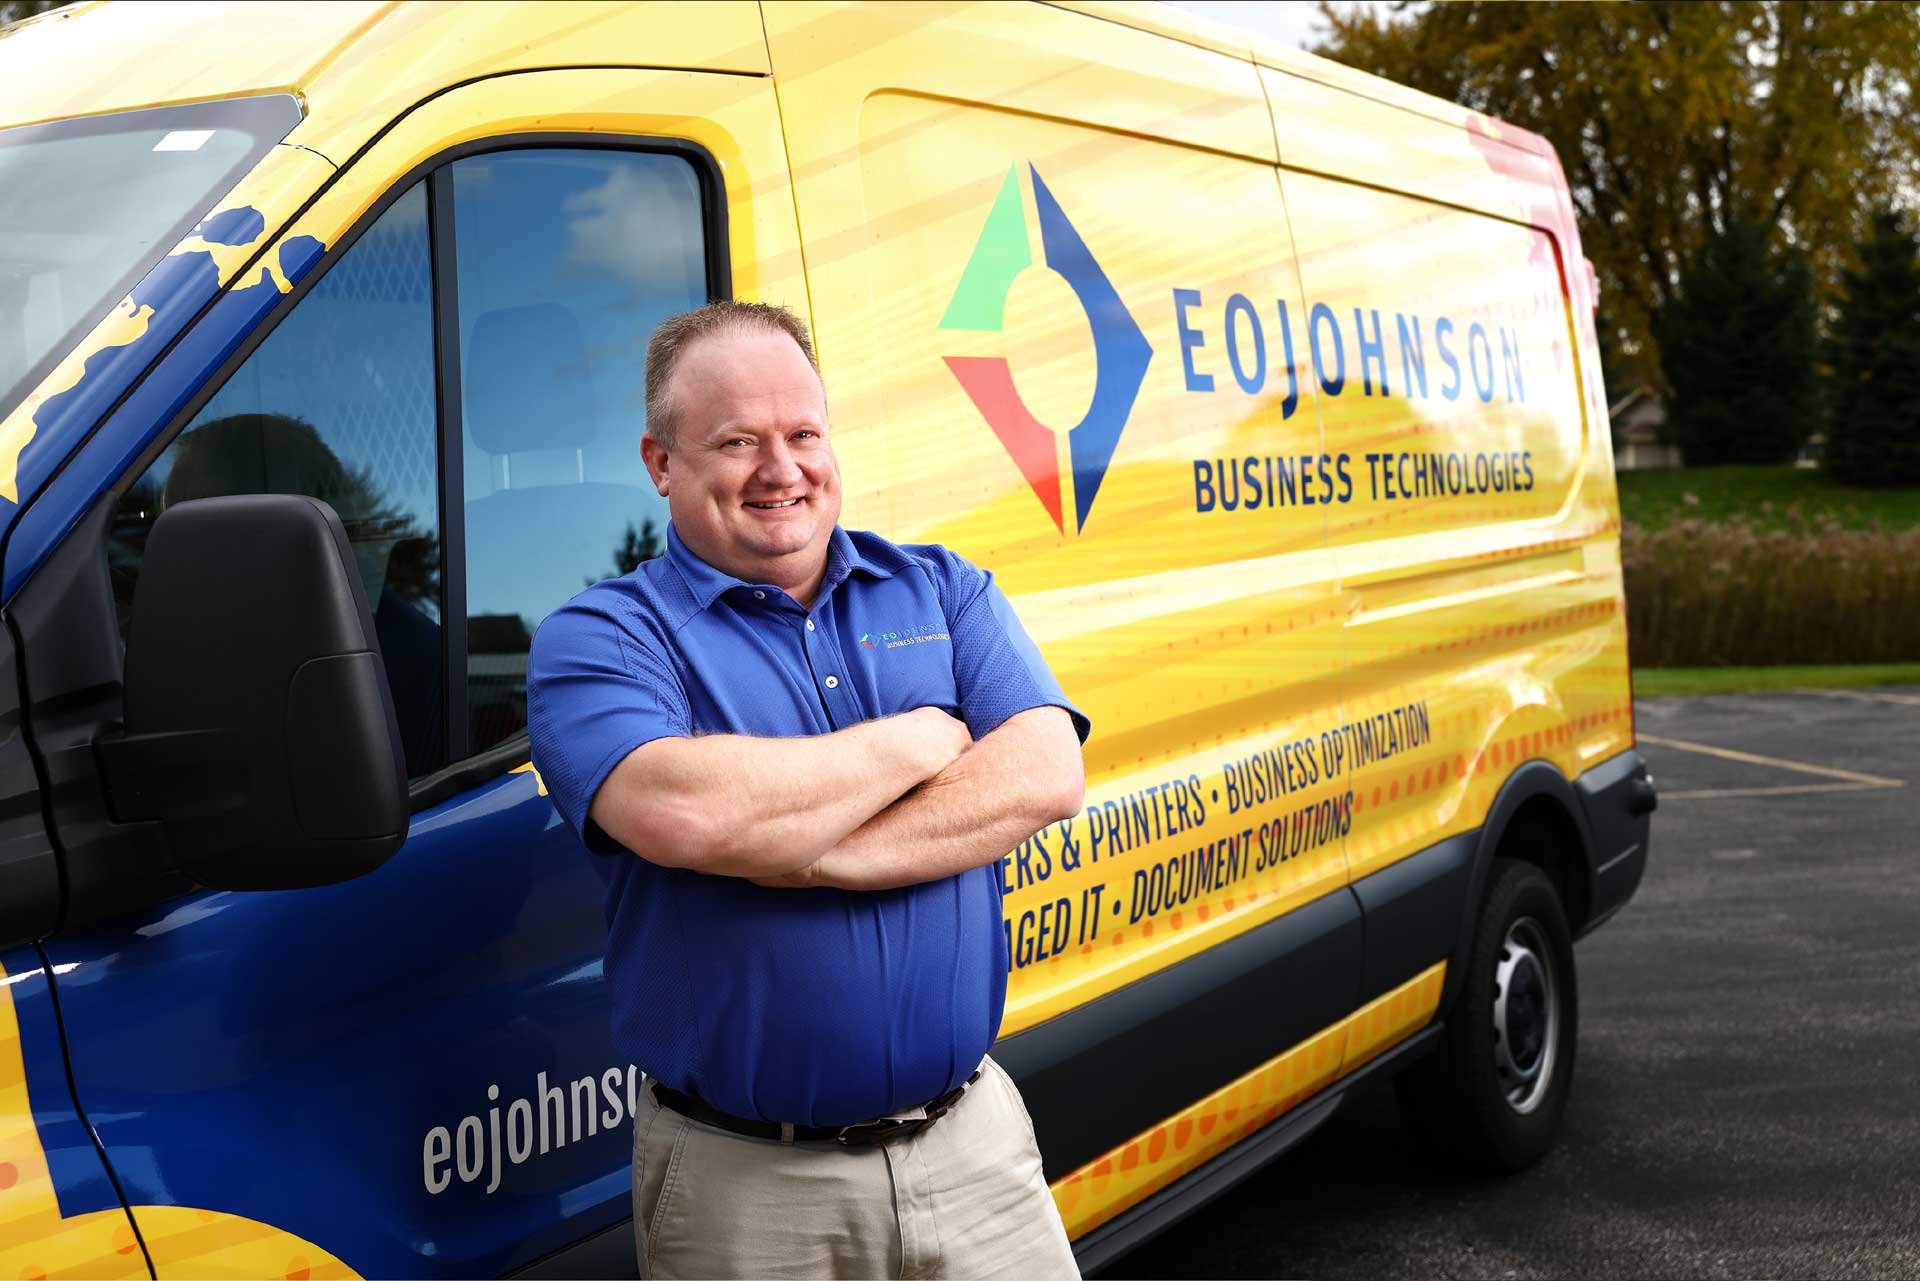 eo johnson employee smiling by print service van